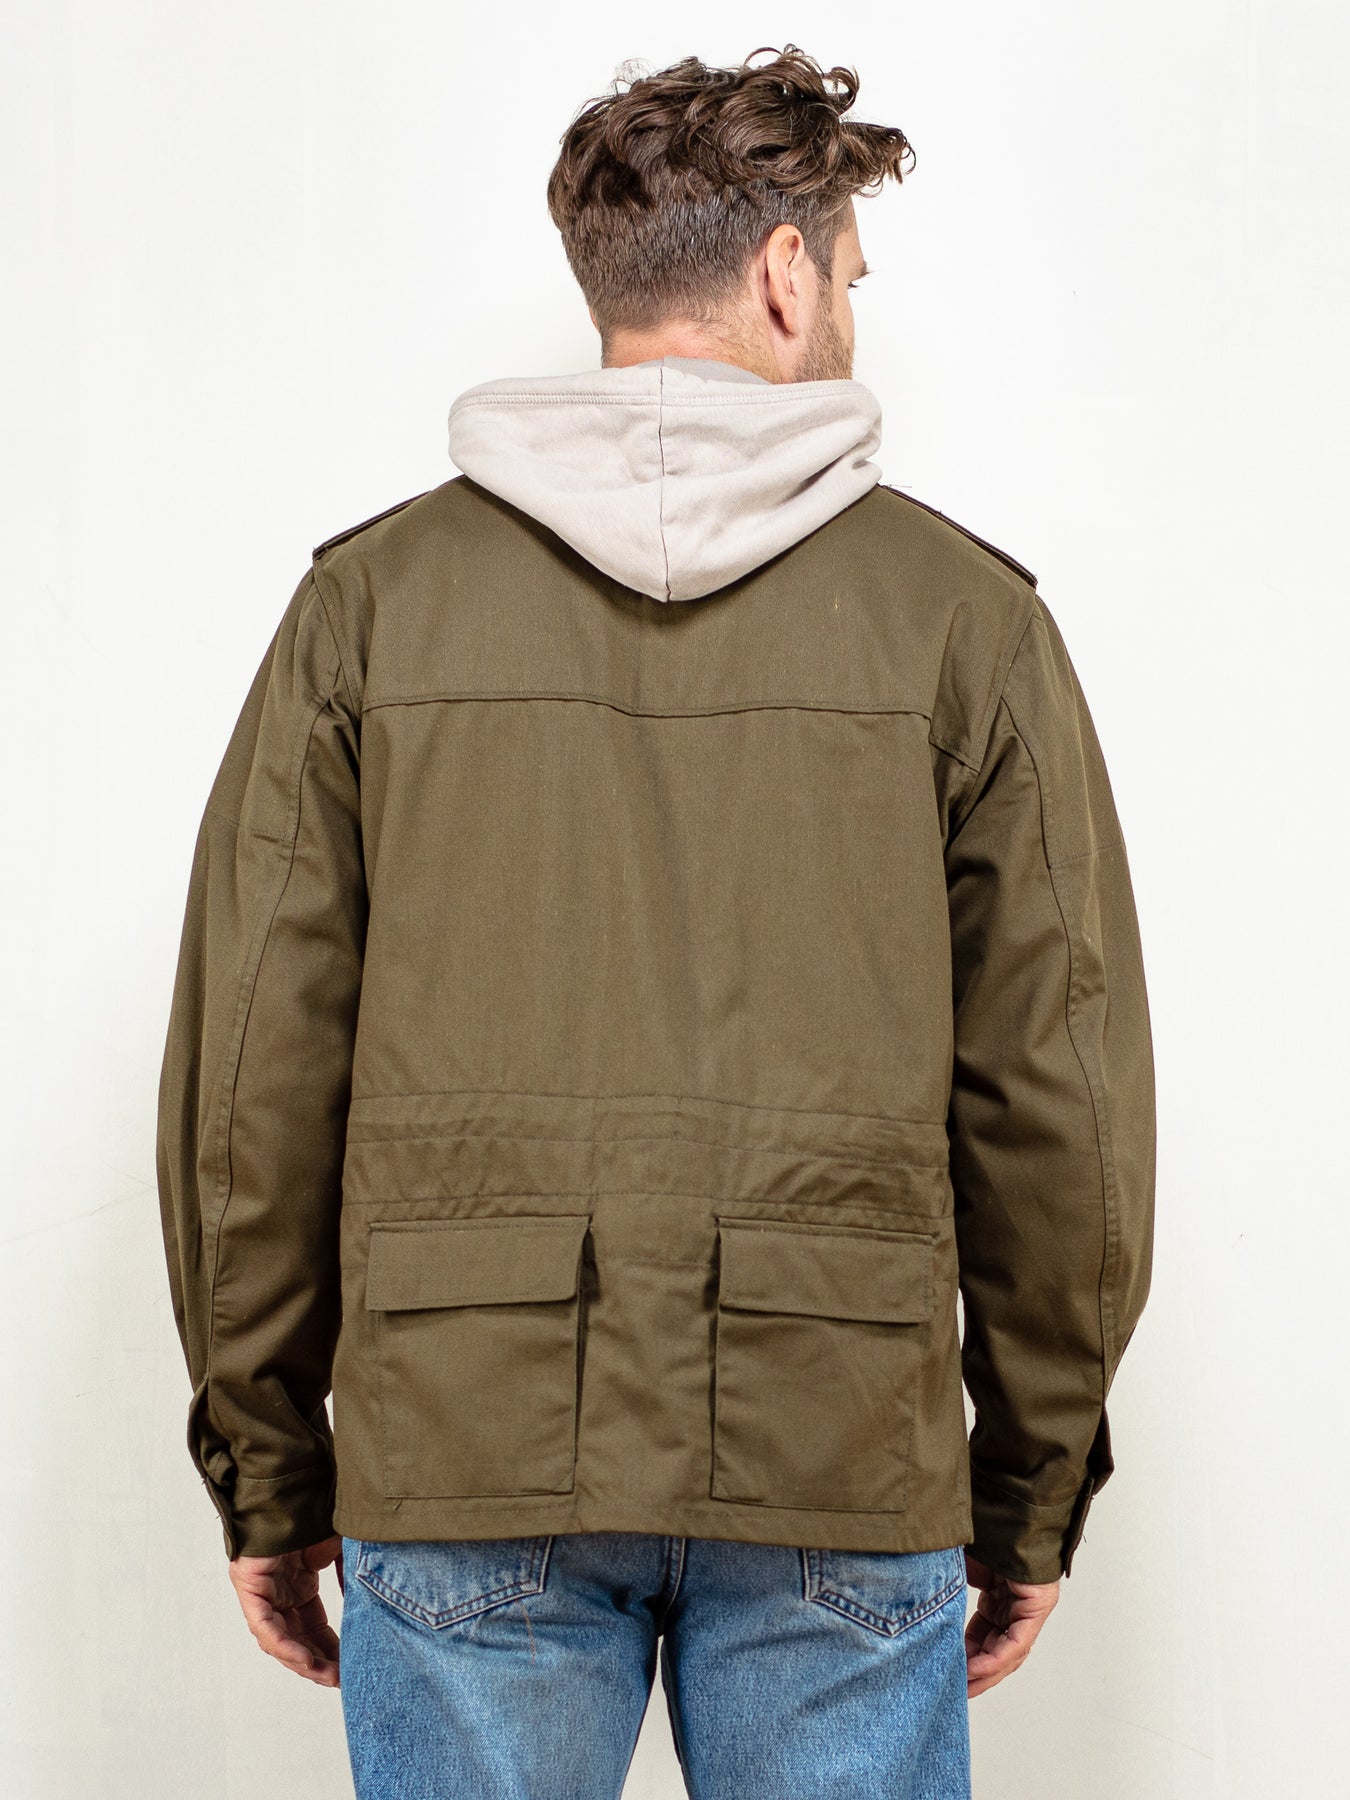 BLEND Cargo Jacket] Size XL - Men's - Green Military Jacket - Zip/Button Up  | eBay